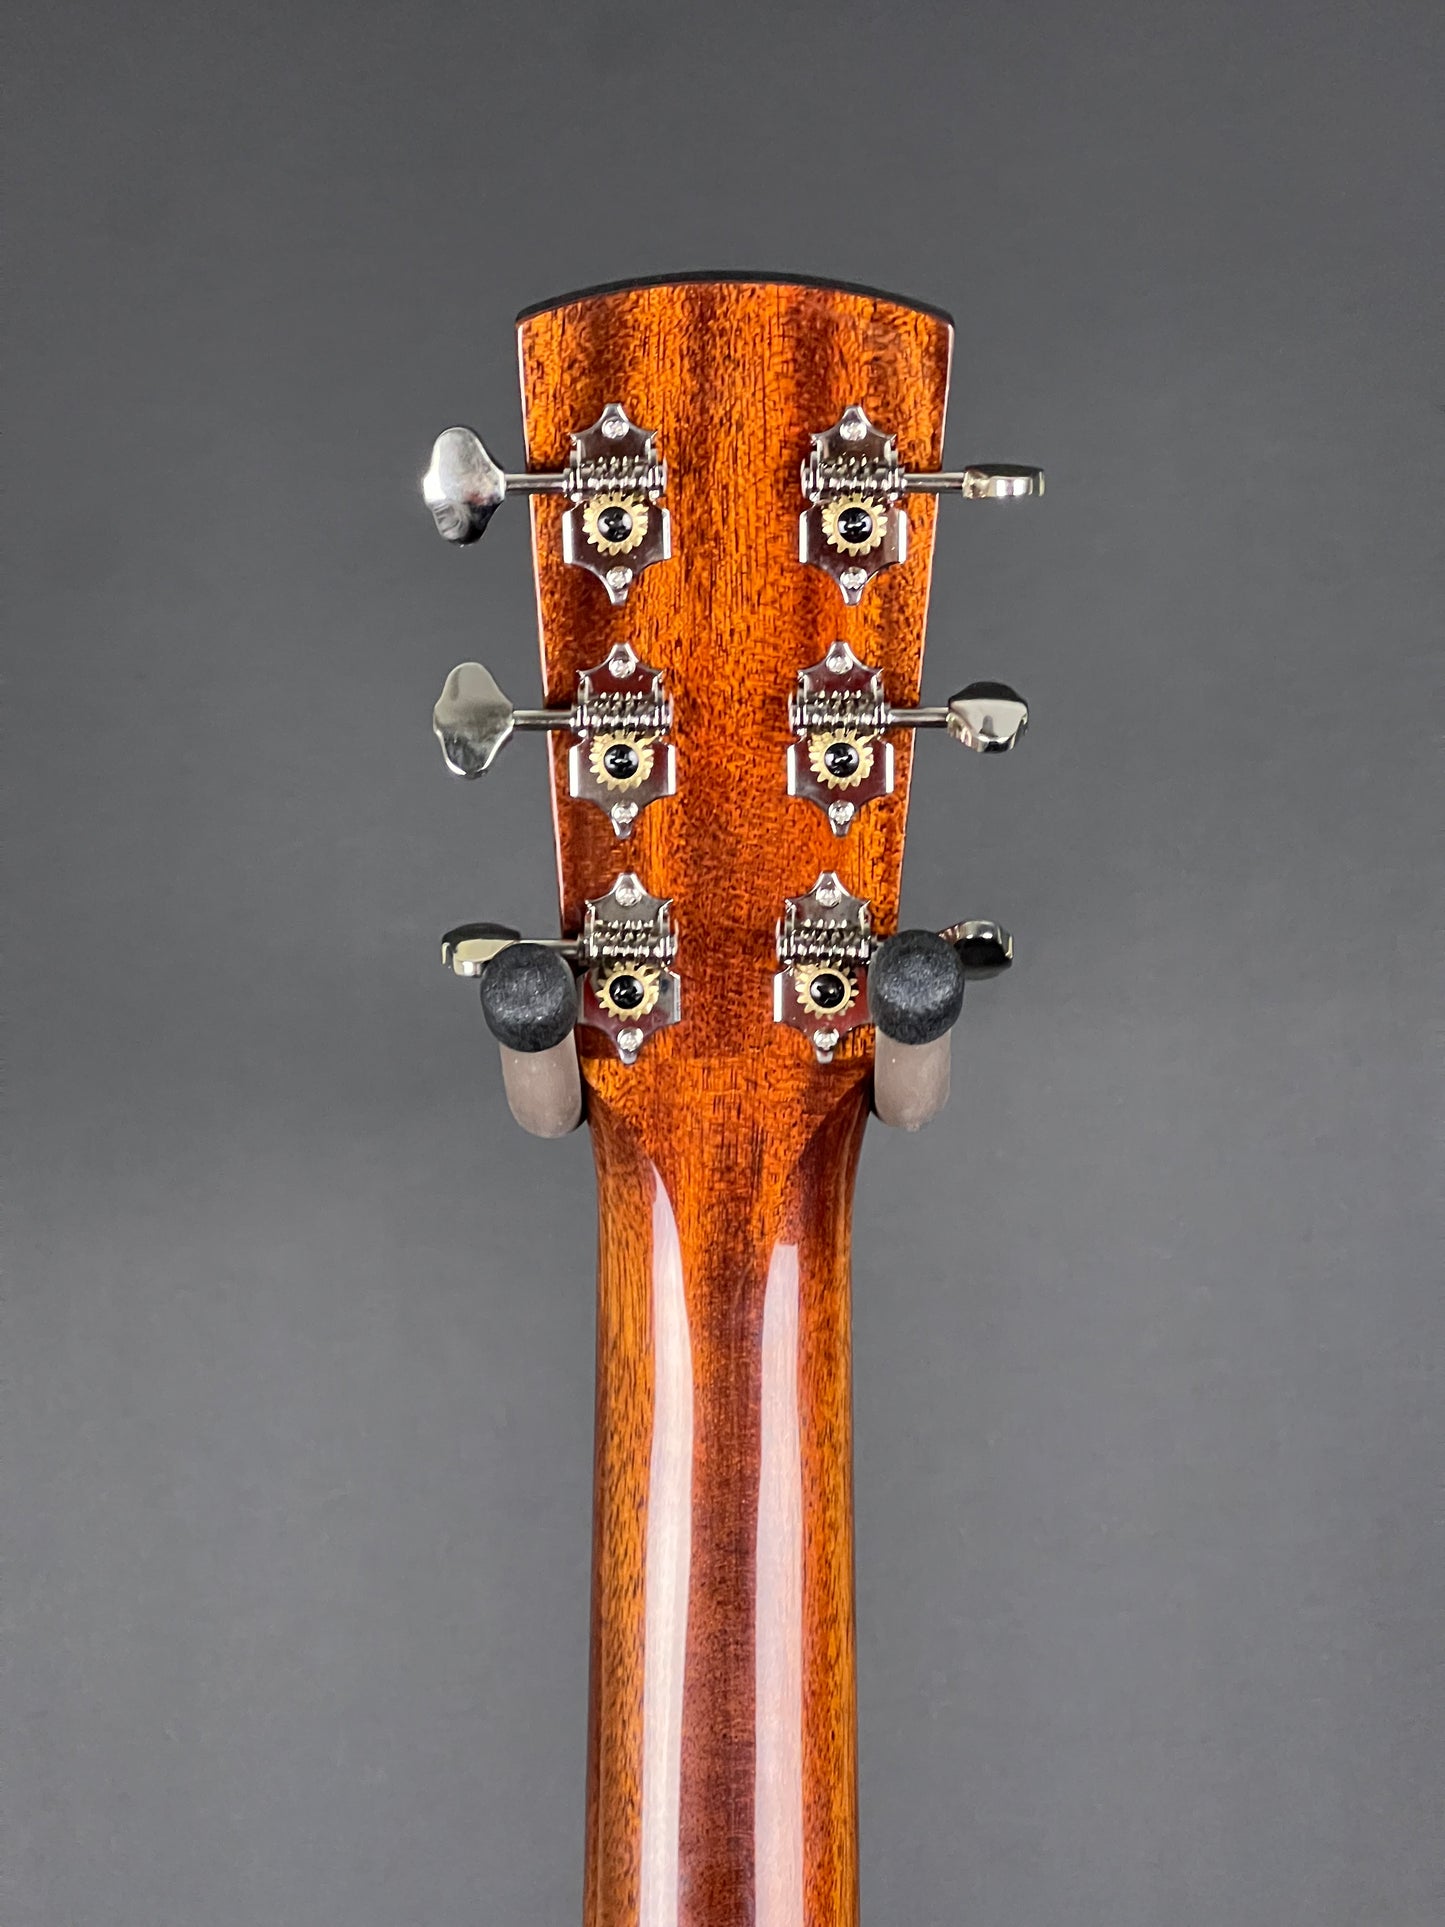 Blueridge BR-160A Historic Craftsman Series Dreadnought Adirondack Spruce/Indian Rosewood Guitar - New